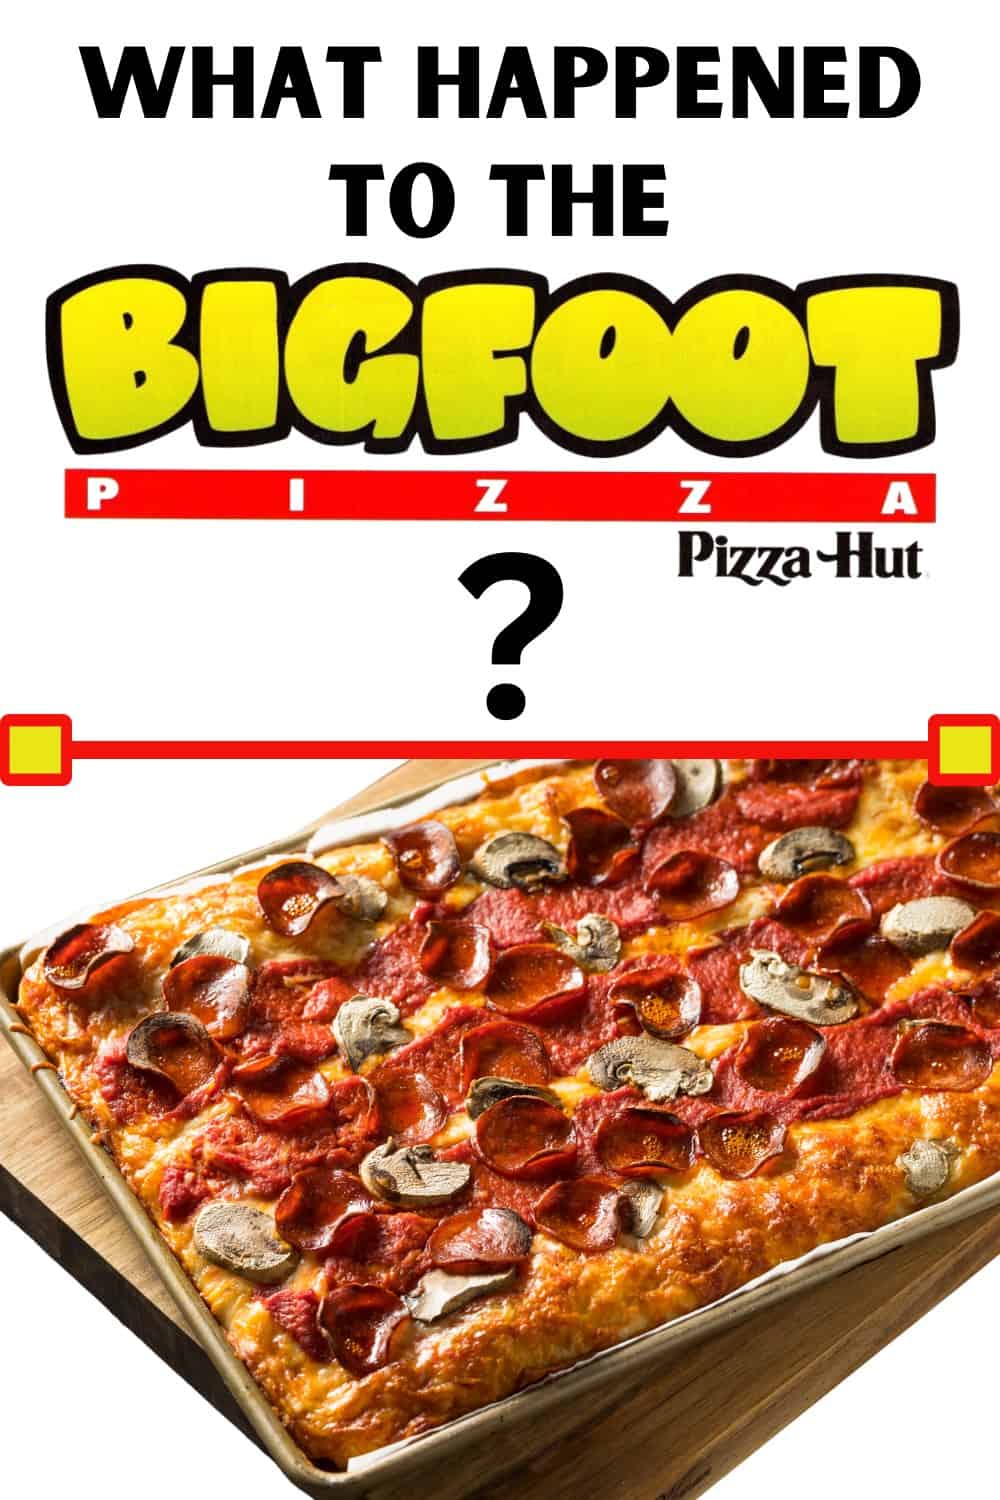 Pizza Hut's Bigfoot Pizza was a light sourdough pizza released in 1993